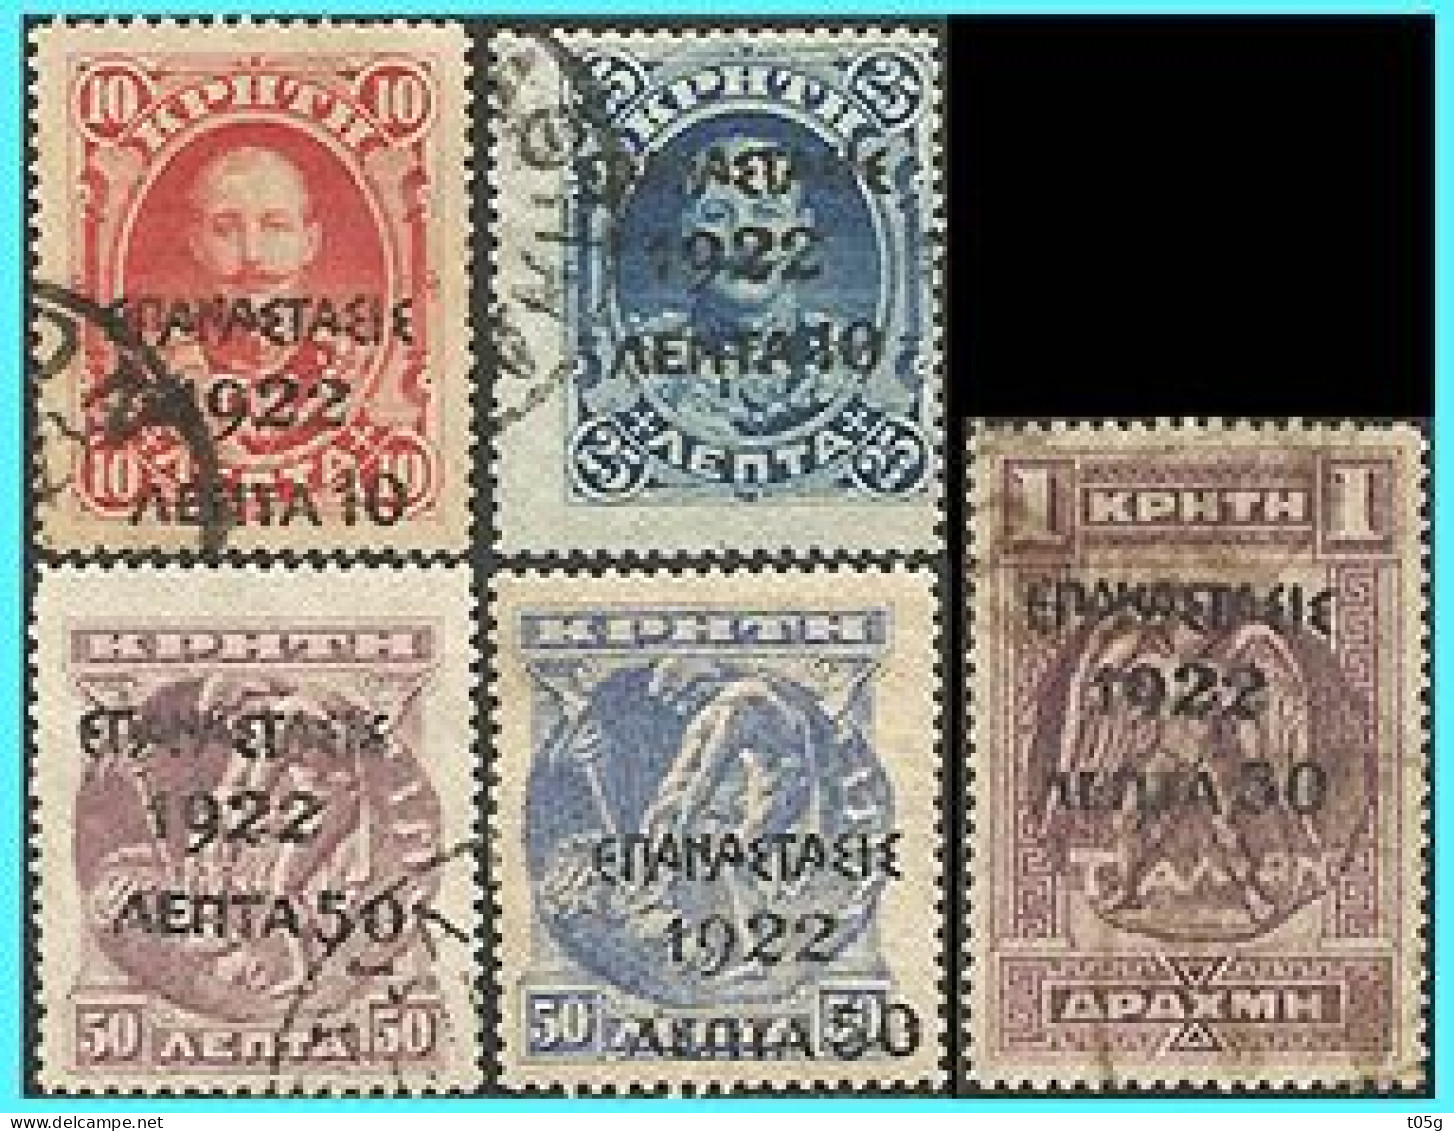 GREECE- GRECE - HELLAS 1923: Cretan Stamps Of 1905 Overprint Complet Set Used - Used Stamps